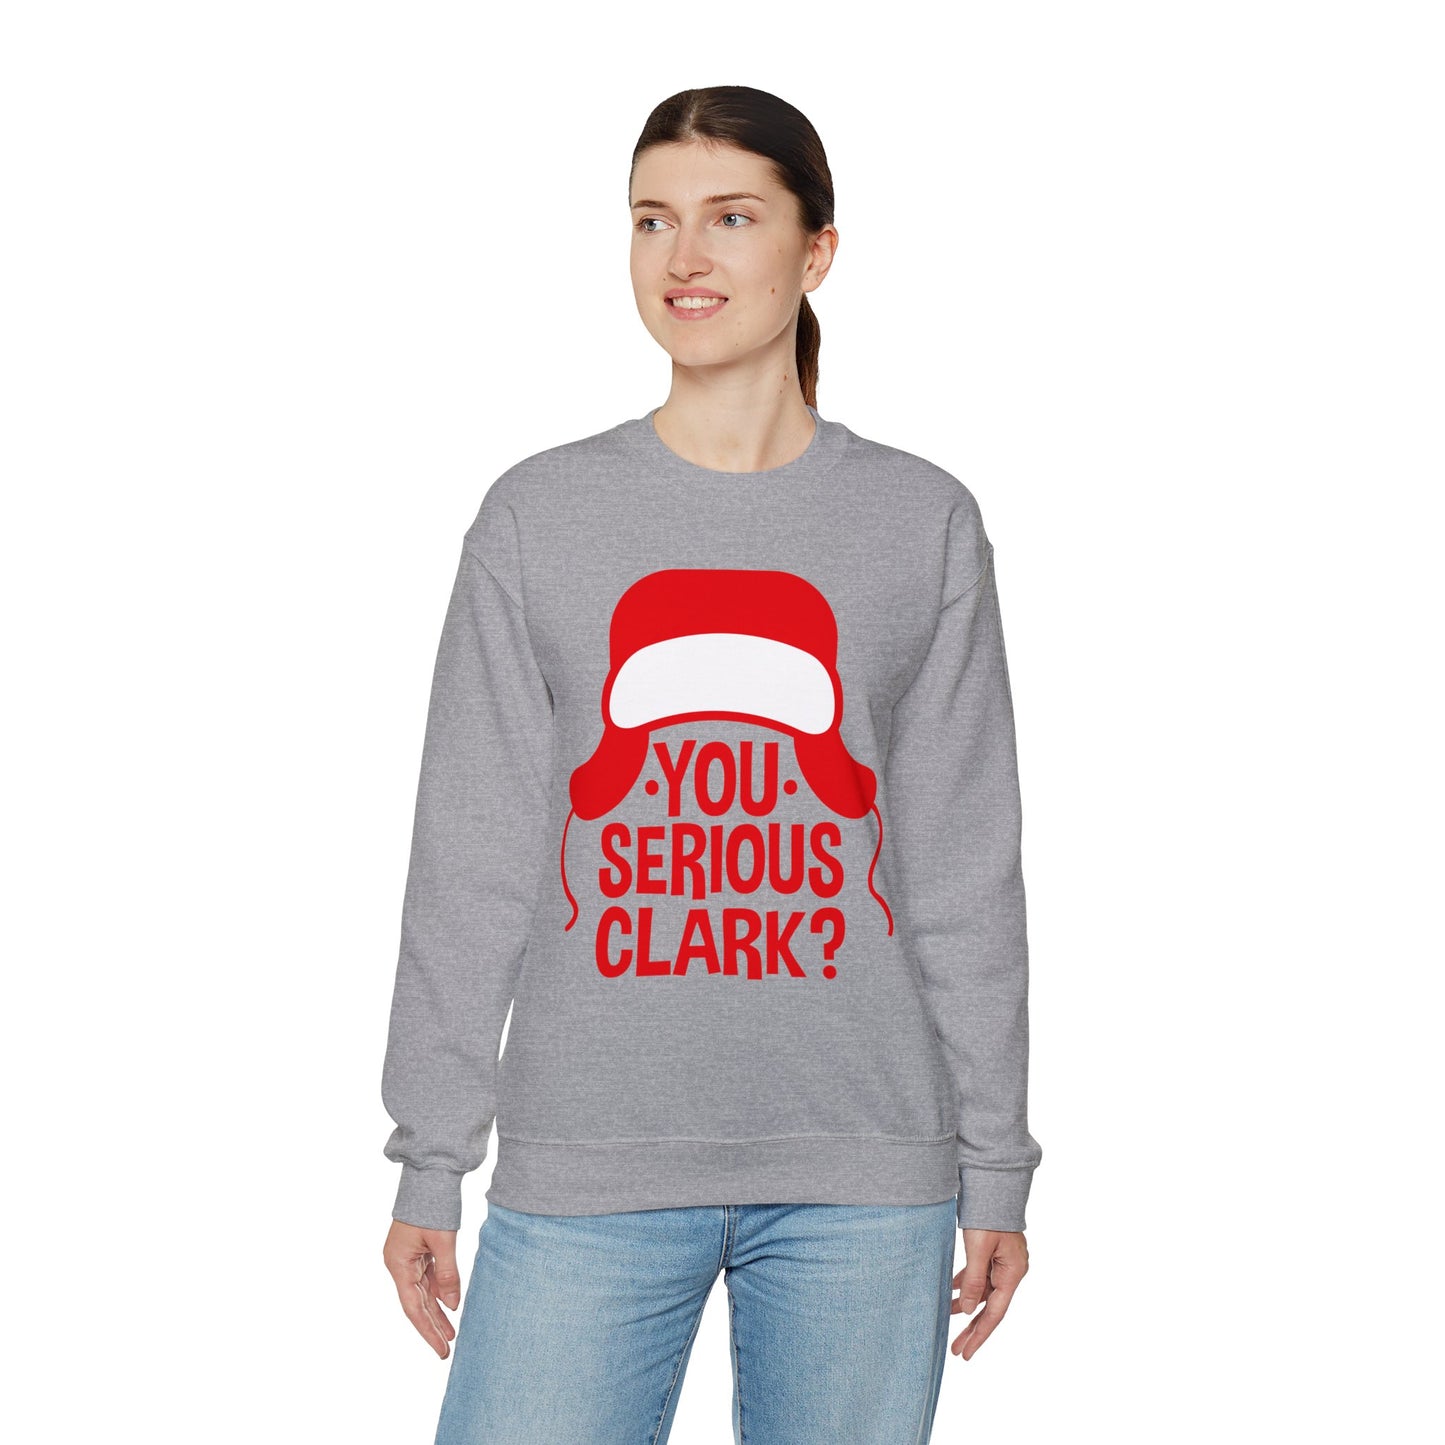 You Serious Clark? - Unisex Sweatshirt